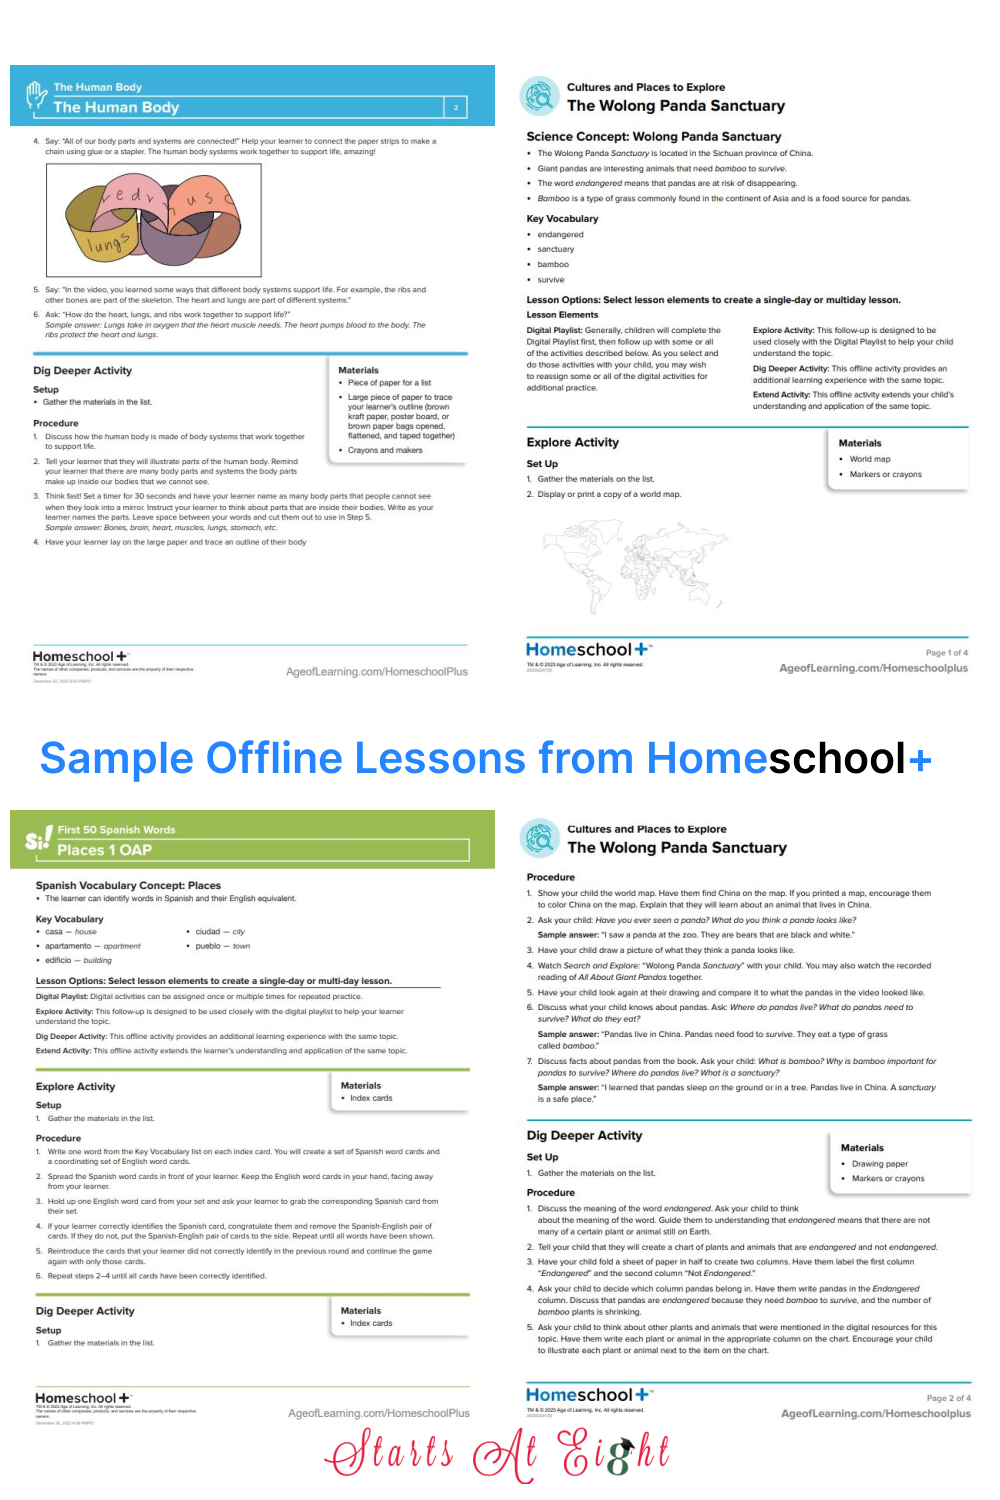 Sample-Offline-Lessons-from-Homeschool